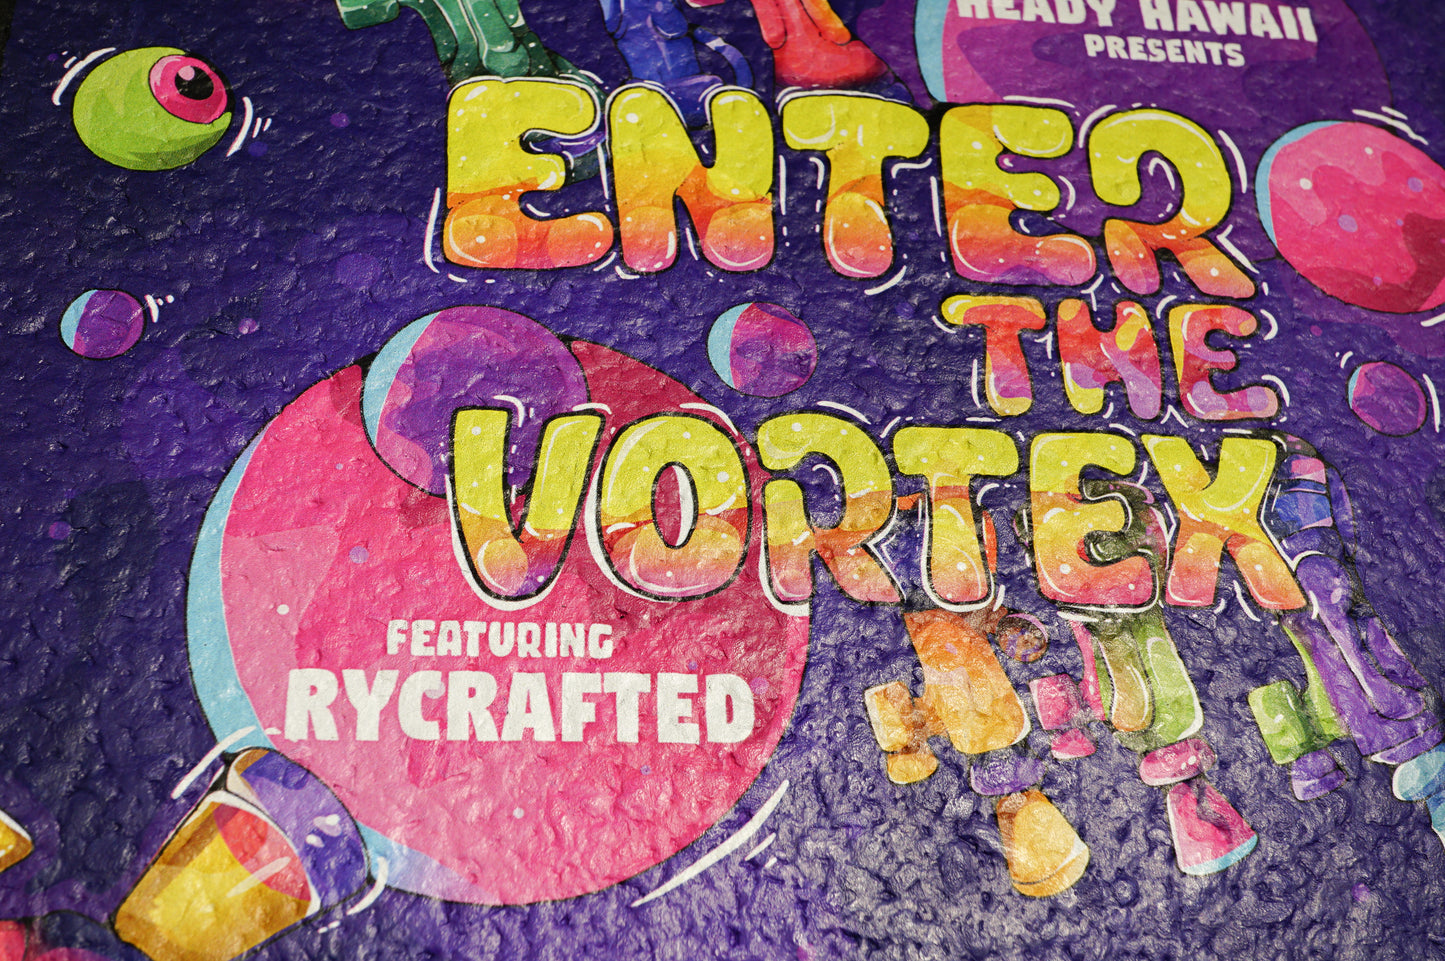 Enter the Vortex Moodmat